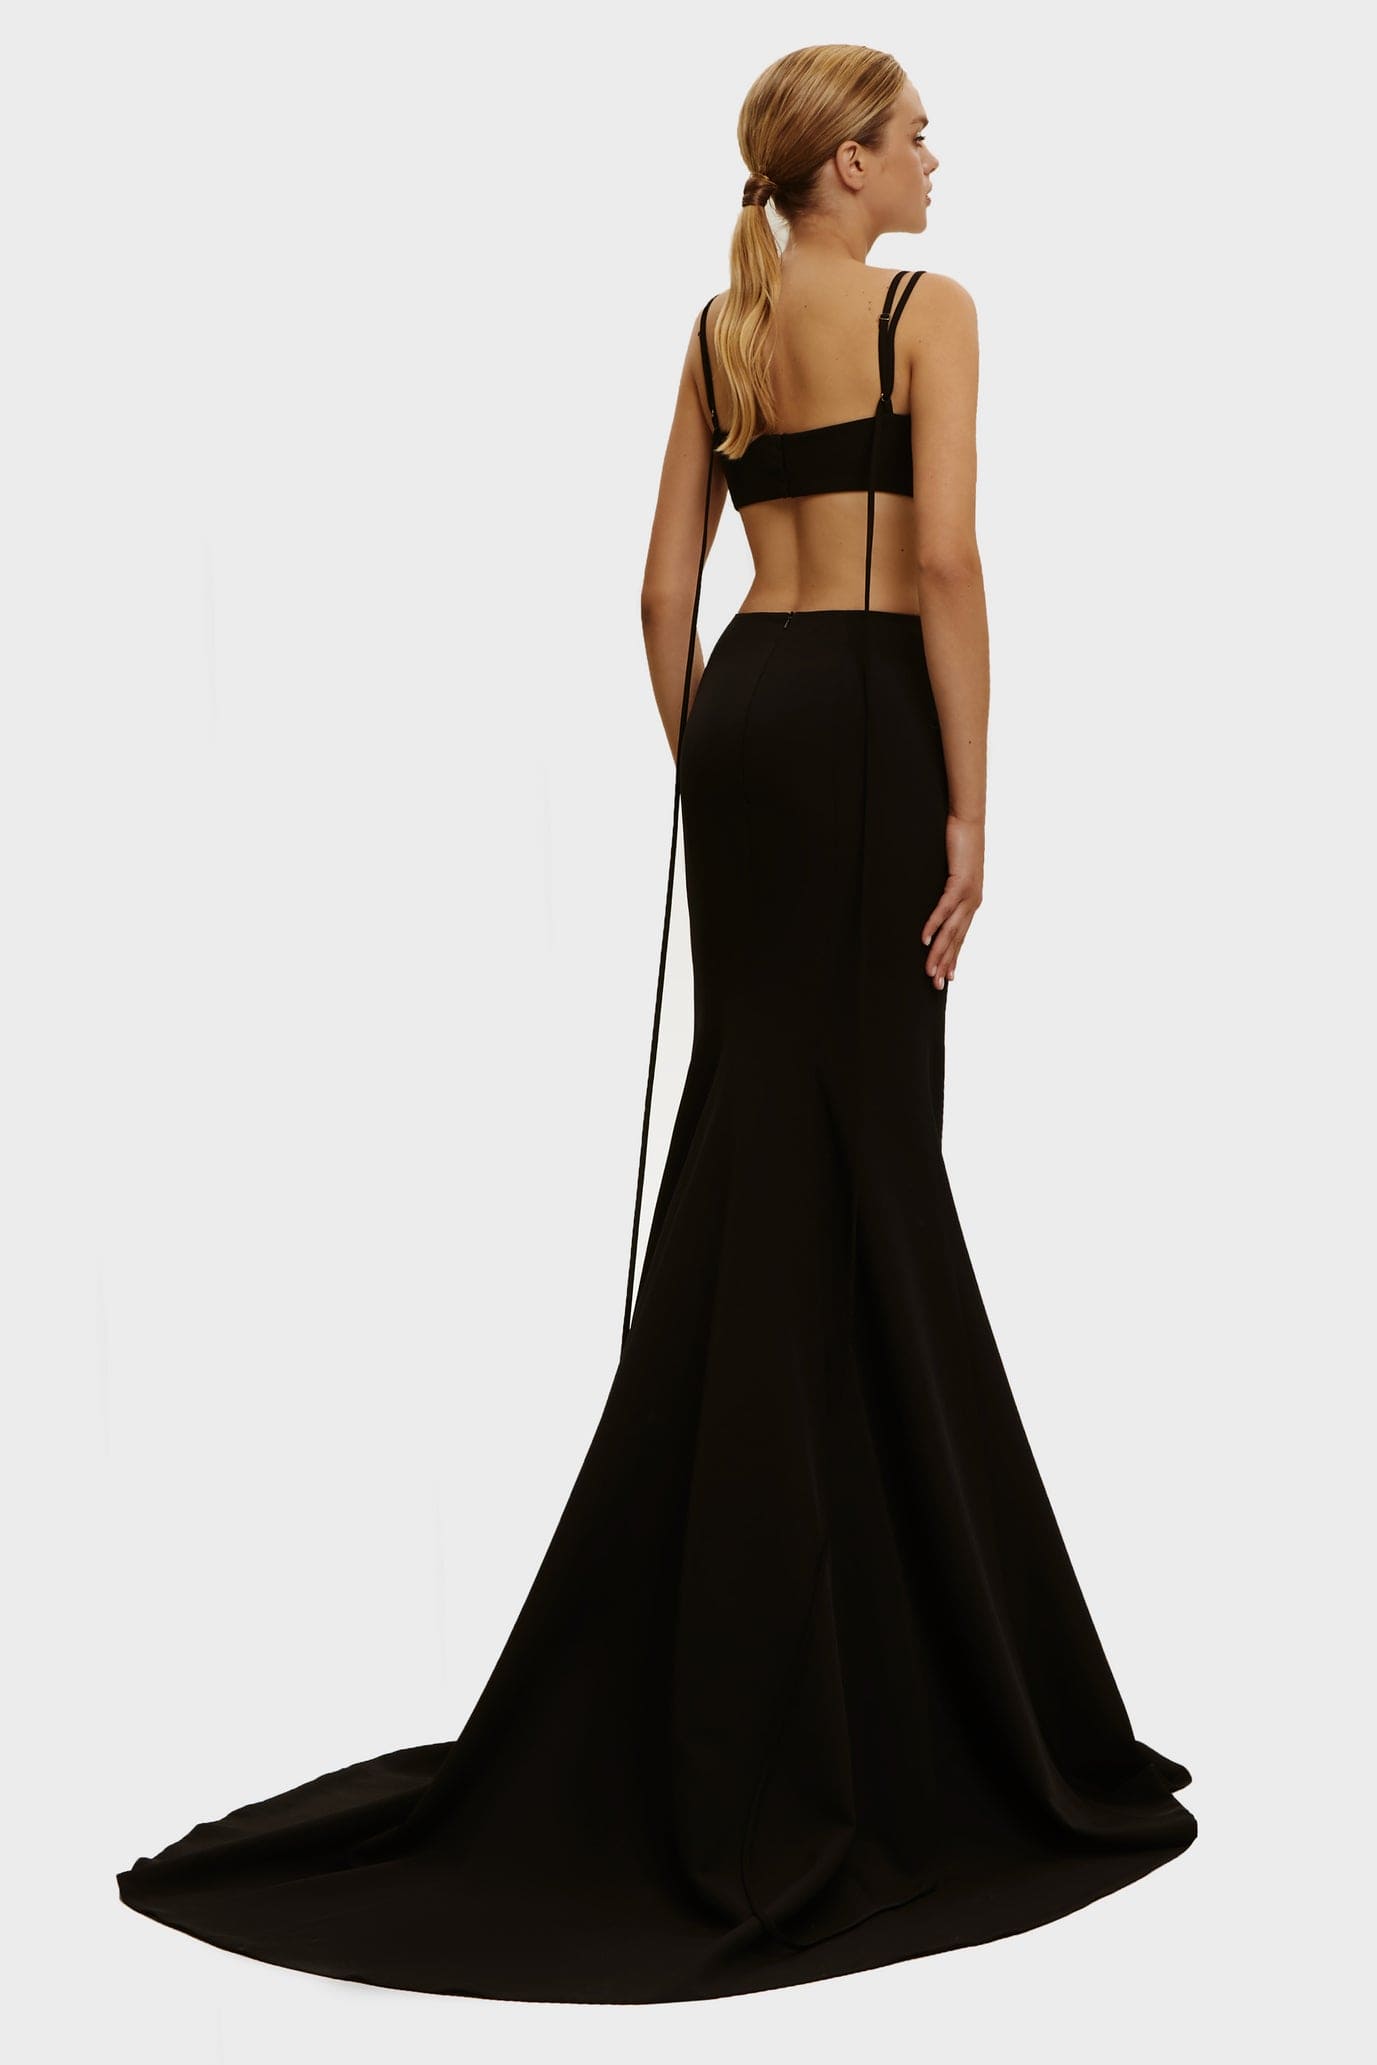 Acler Nash side-cut Detail Dress - Farfetch